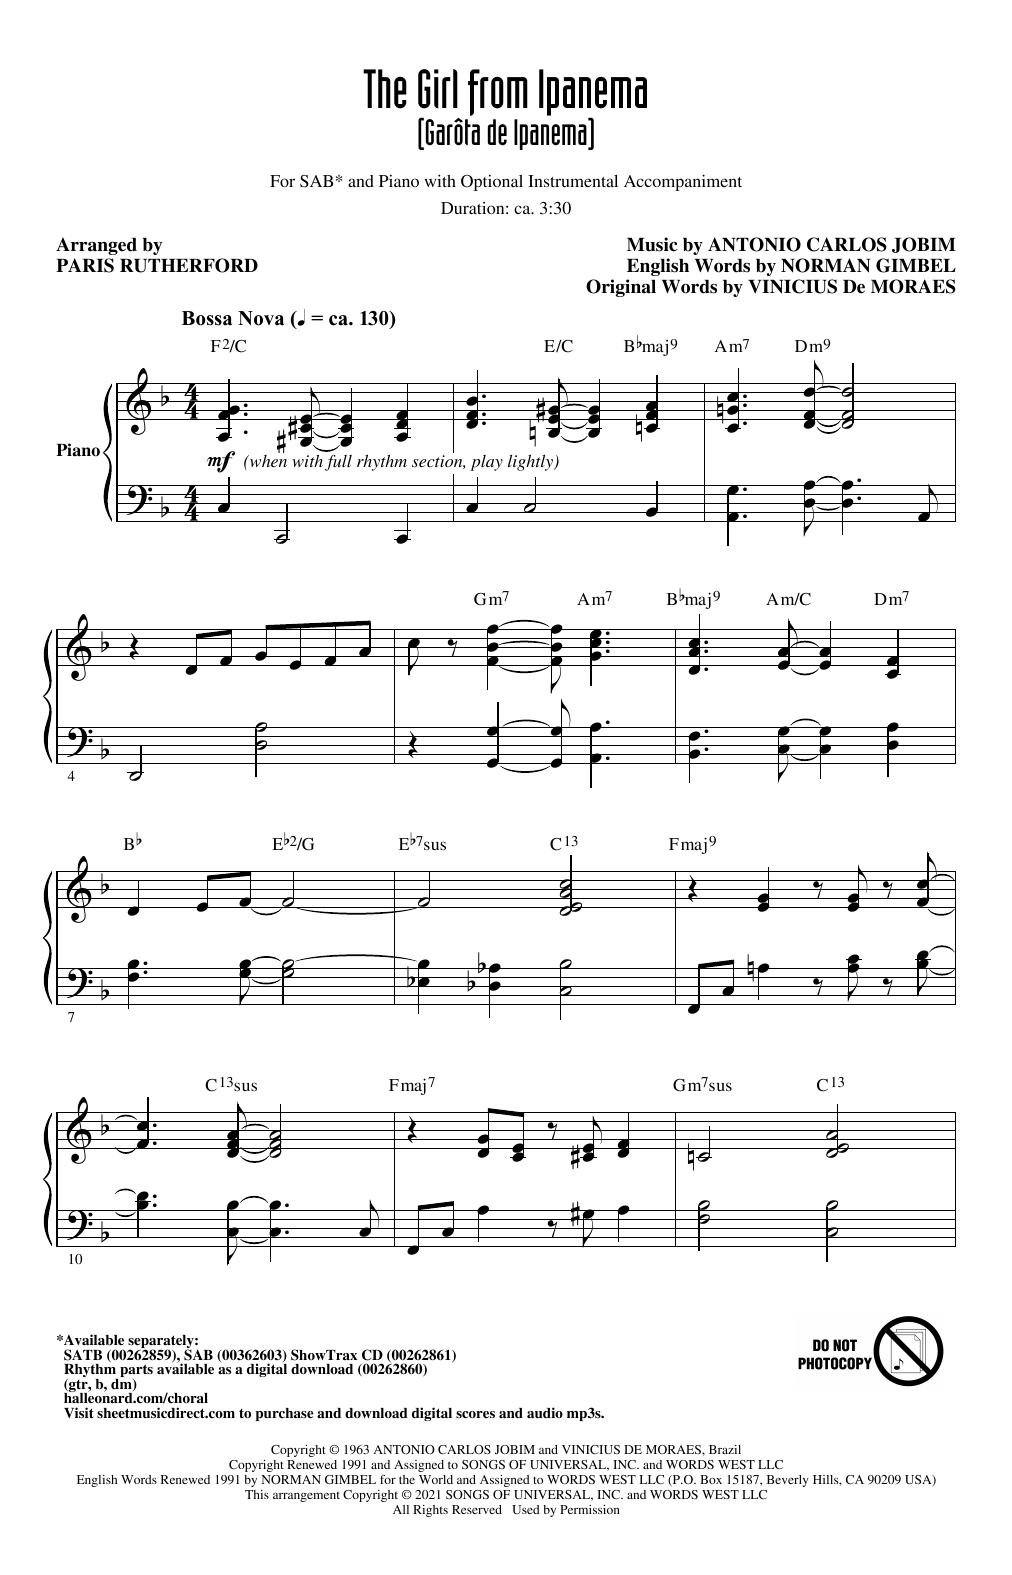 Antonio Carlos Jobim The Girl from Ipanema (Garôta de Ipanema) (arr. Paris Rutherford) Sheet Music Notes & Chords for SAB Choir - Download or Print PDF